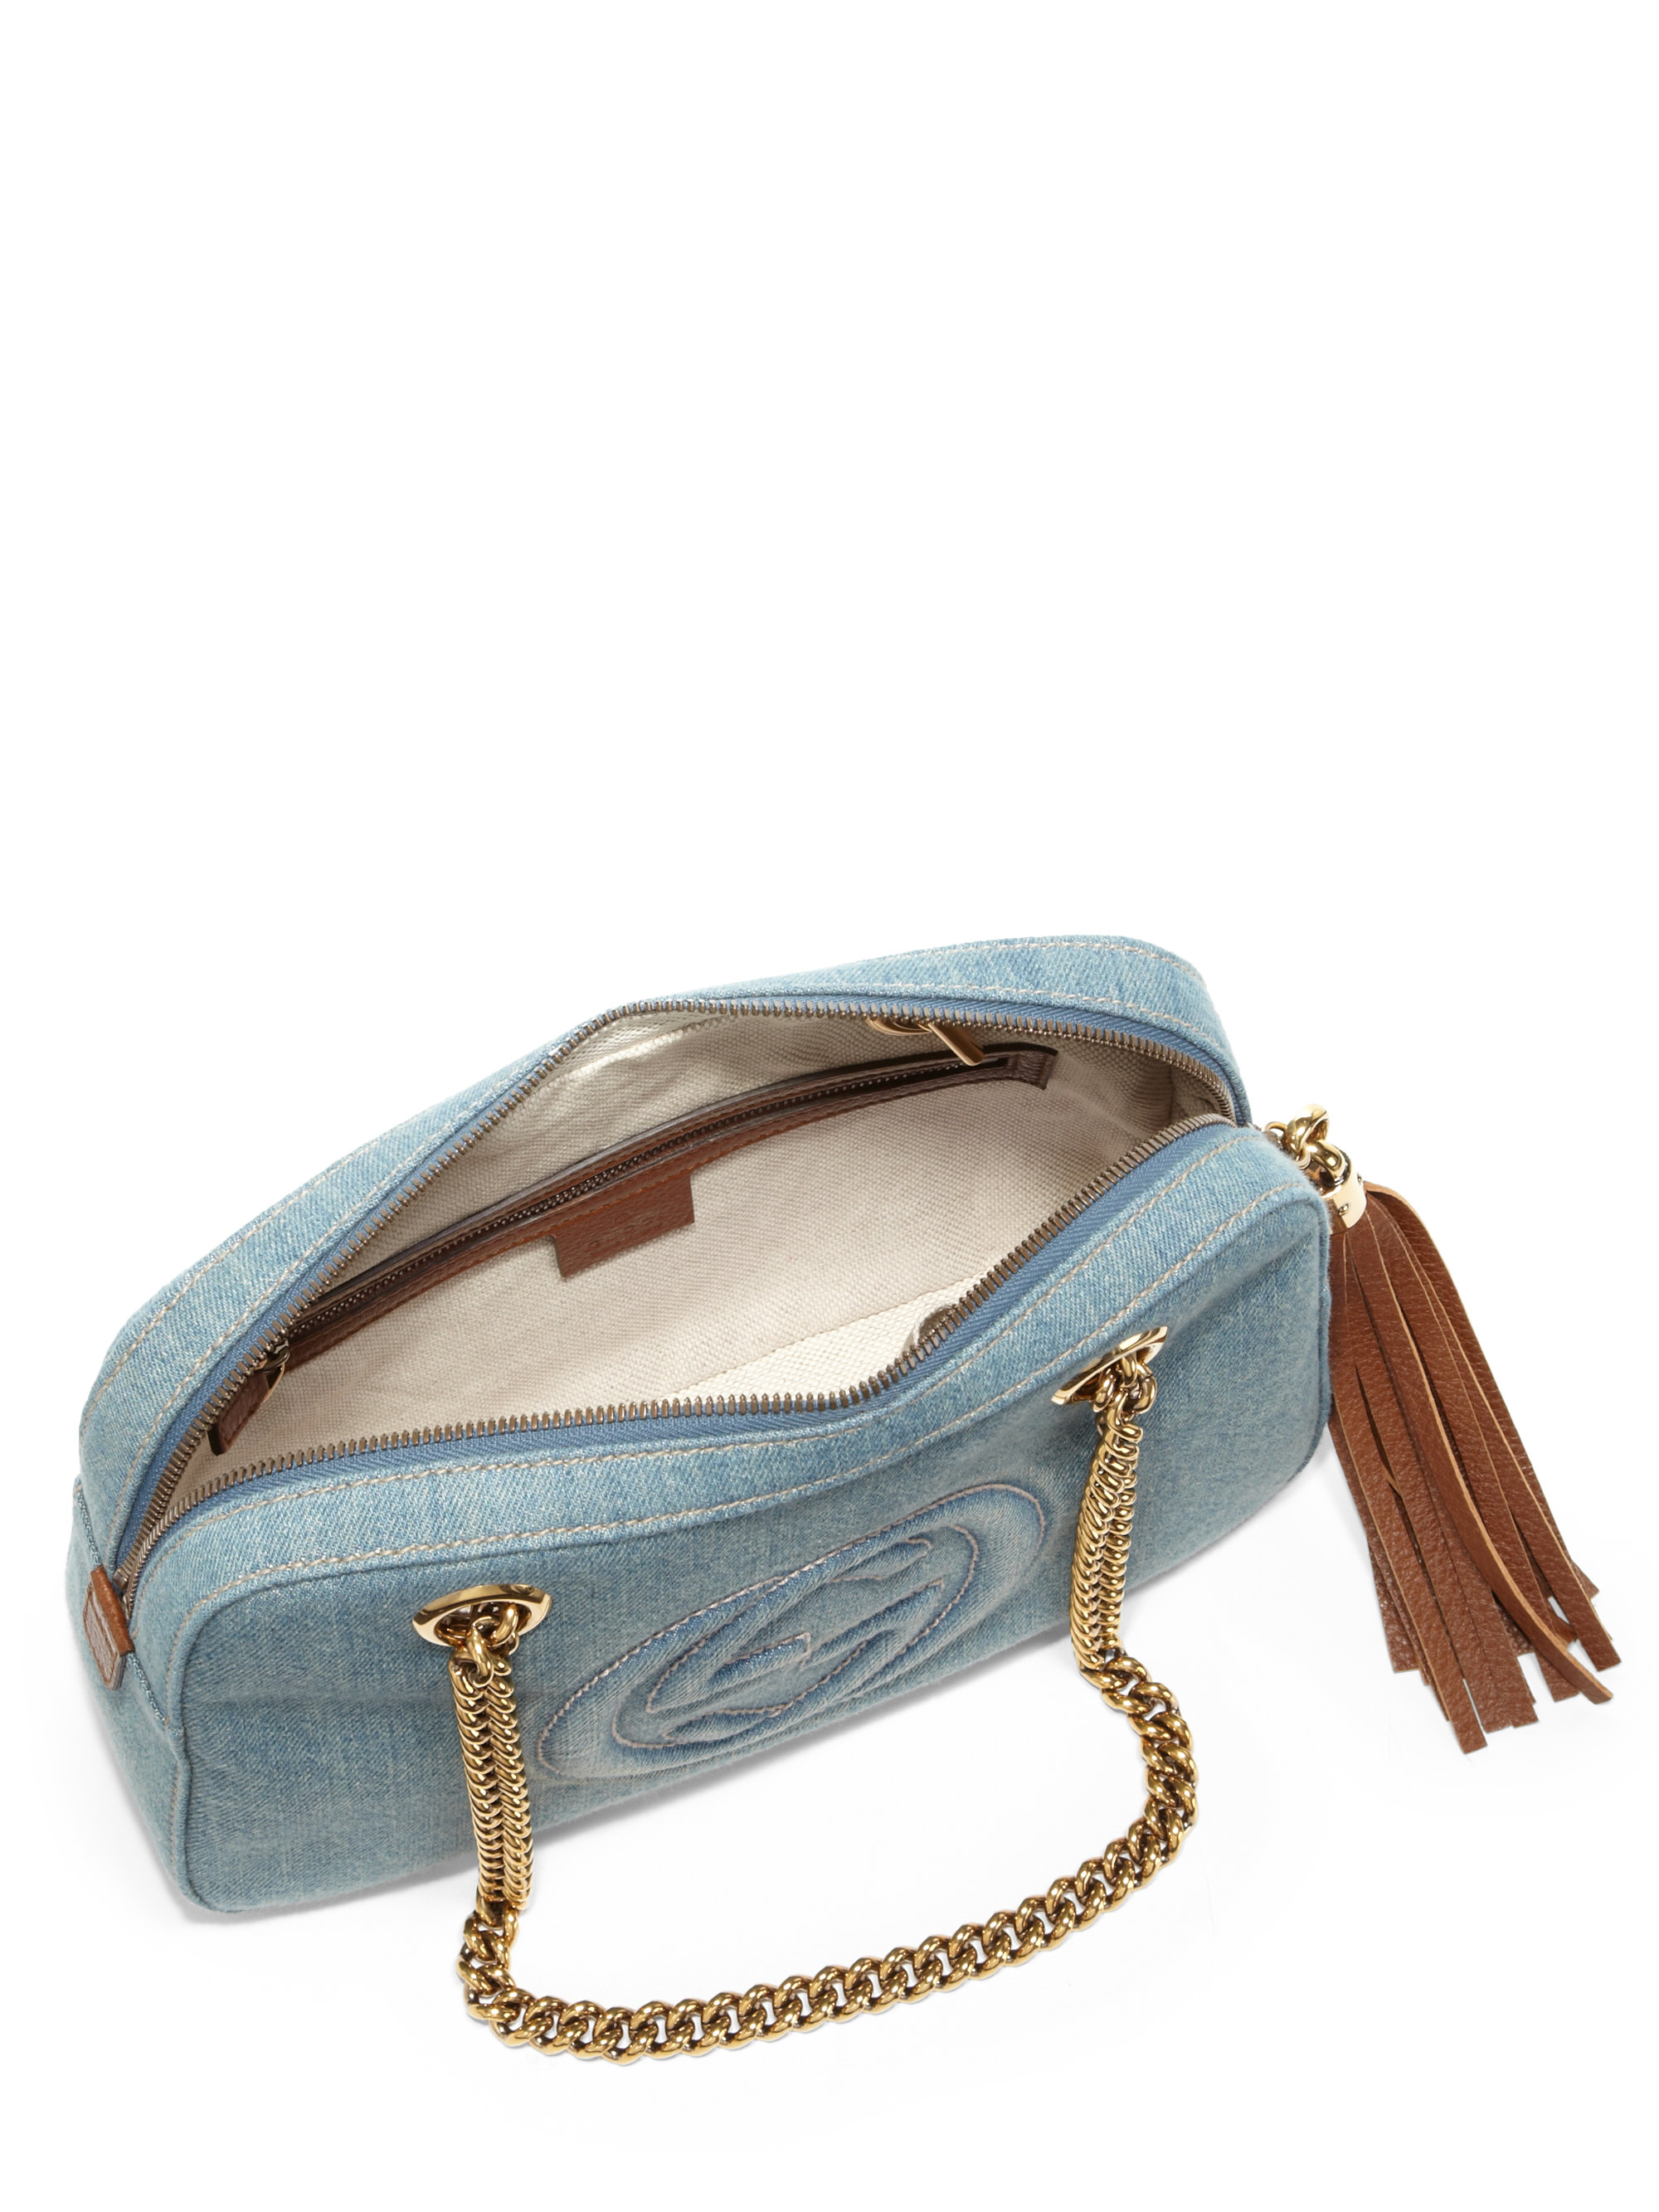 Gucci Soho Blue Denim Shoulder Bag - Lyst